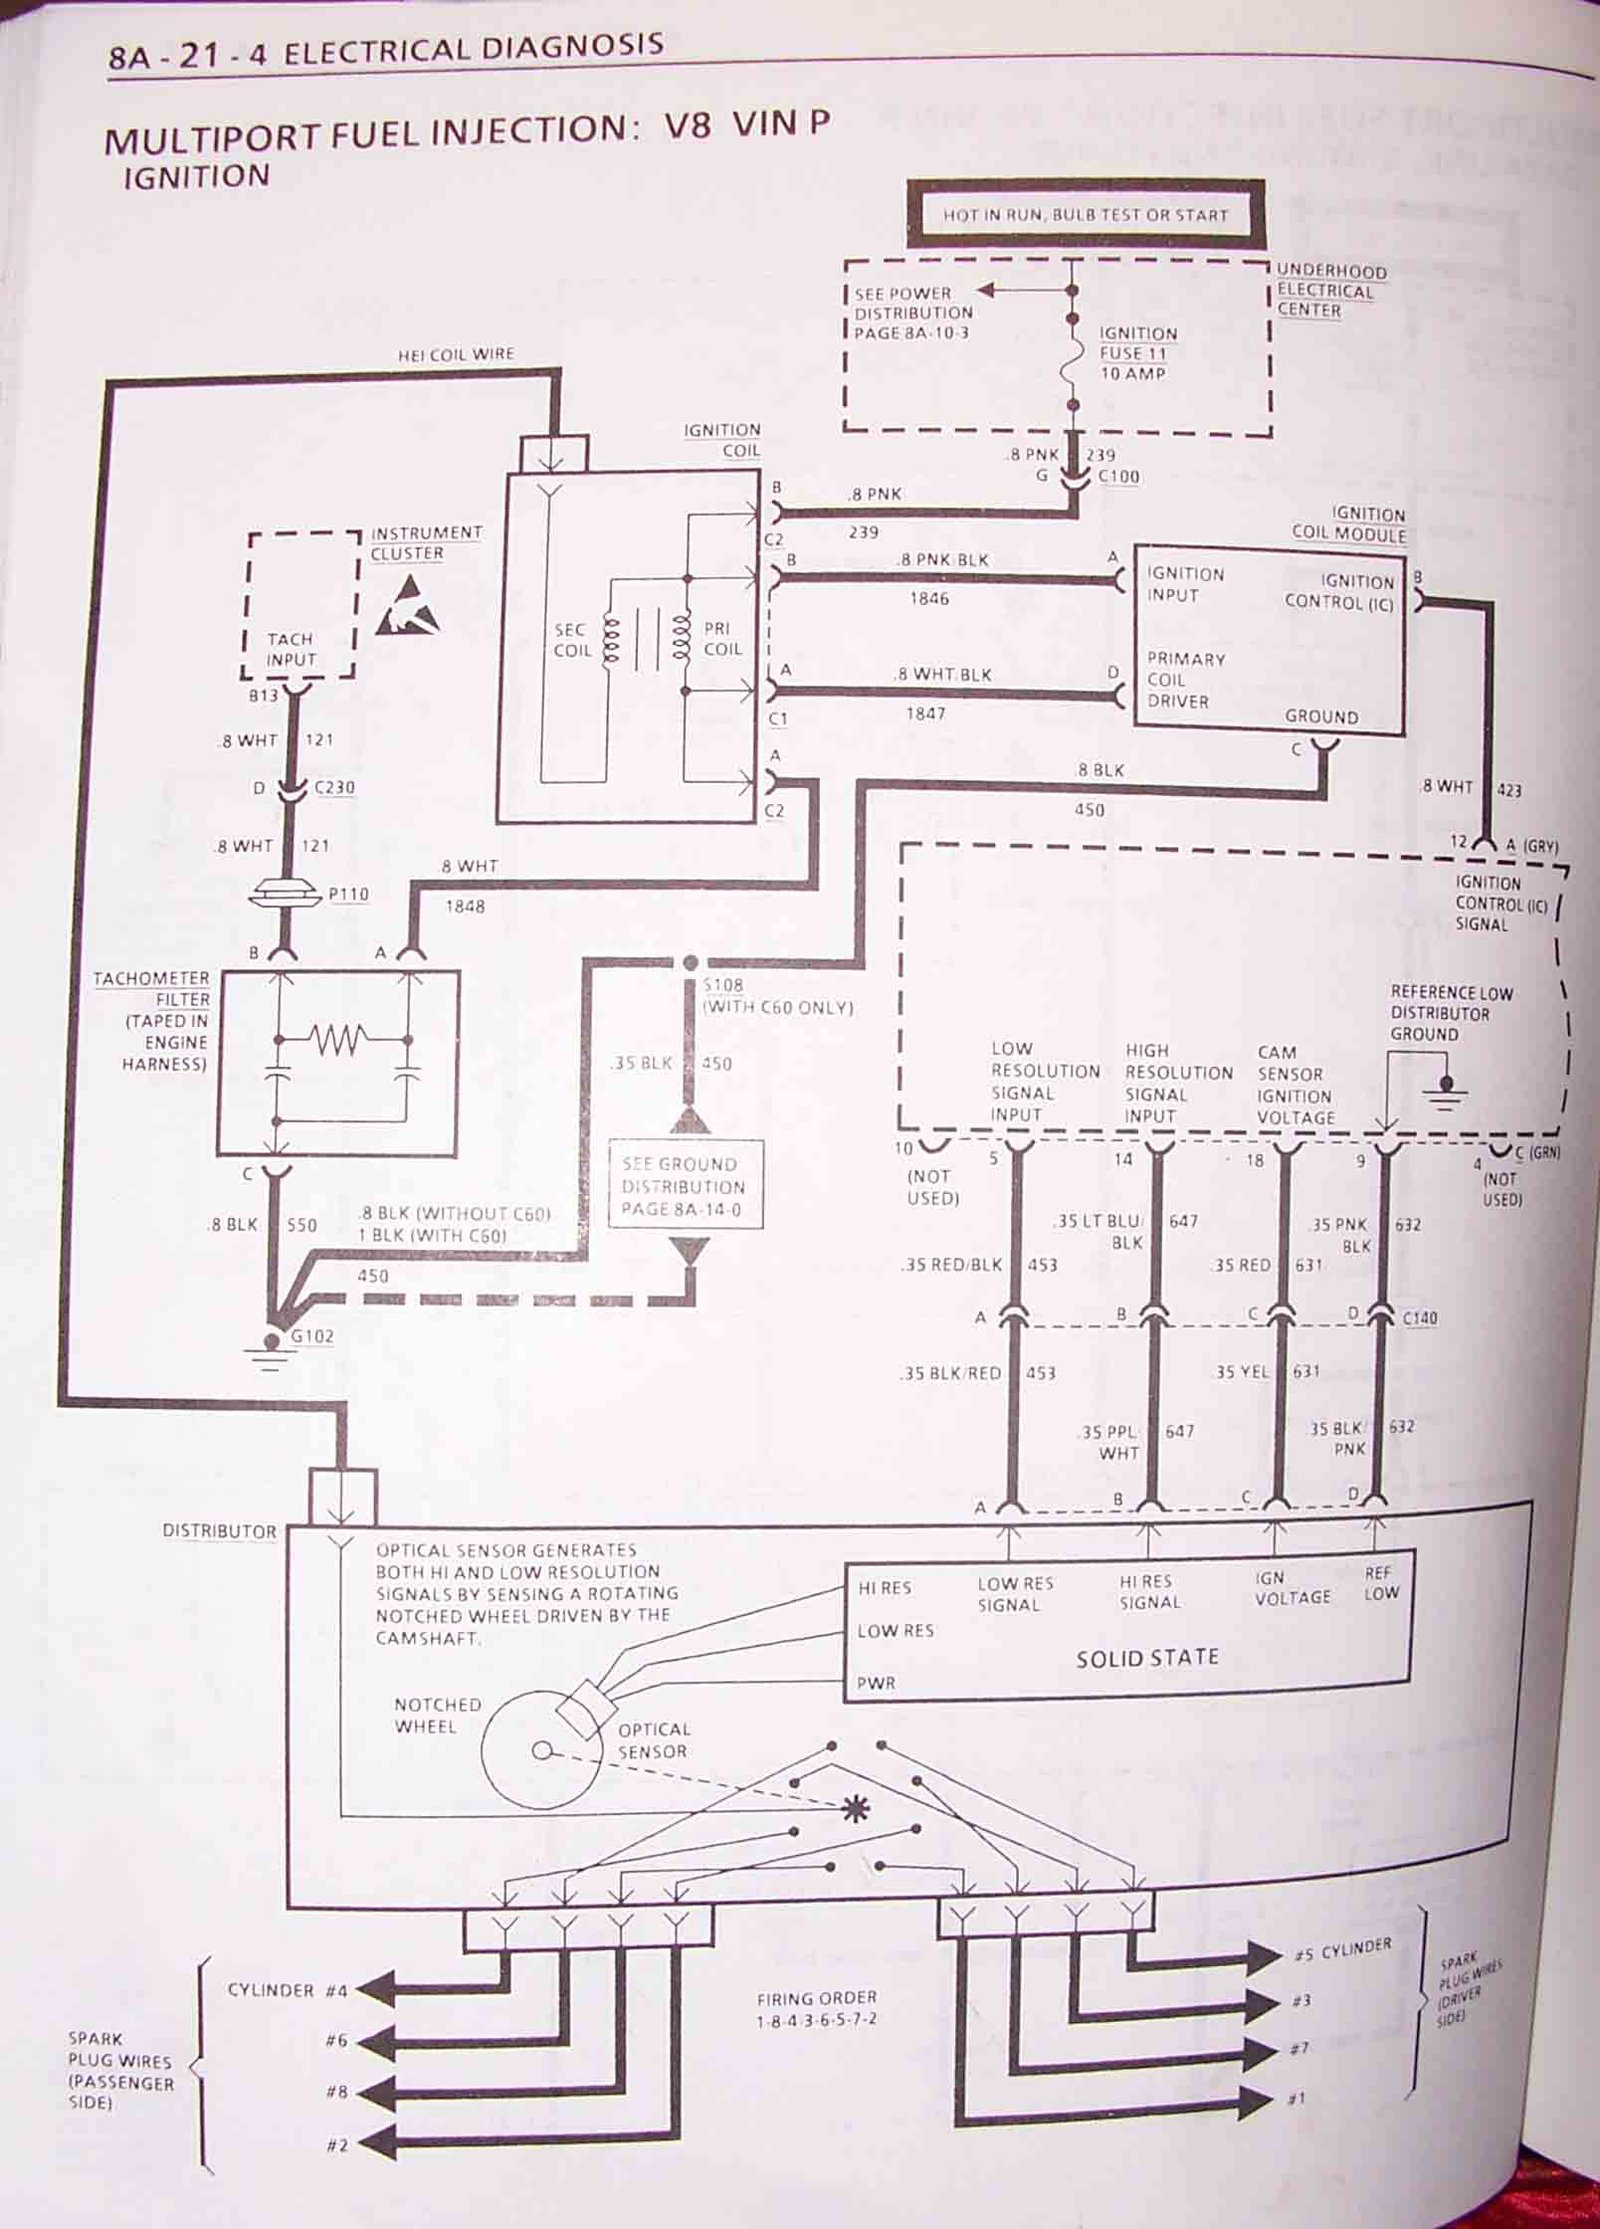 lt1 optispark wiring diagram